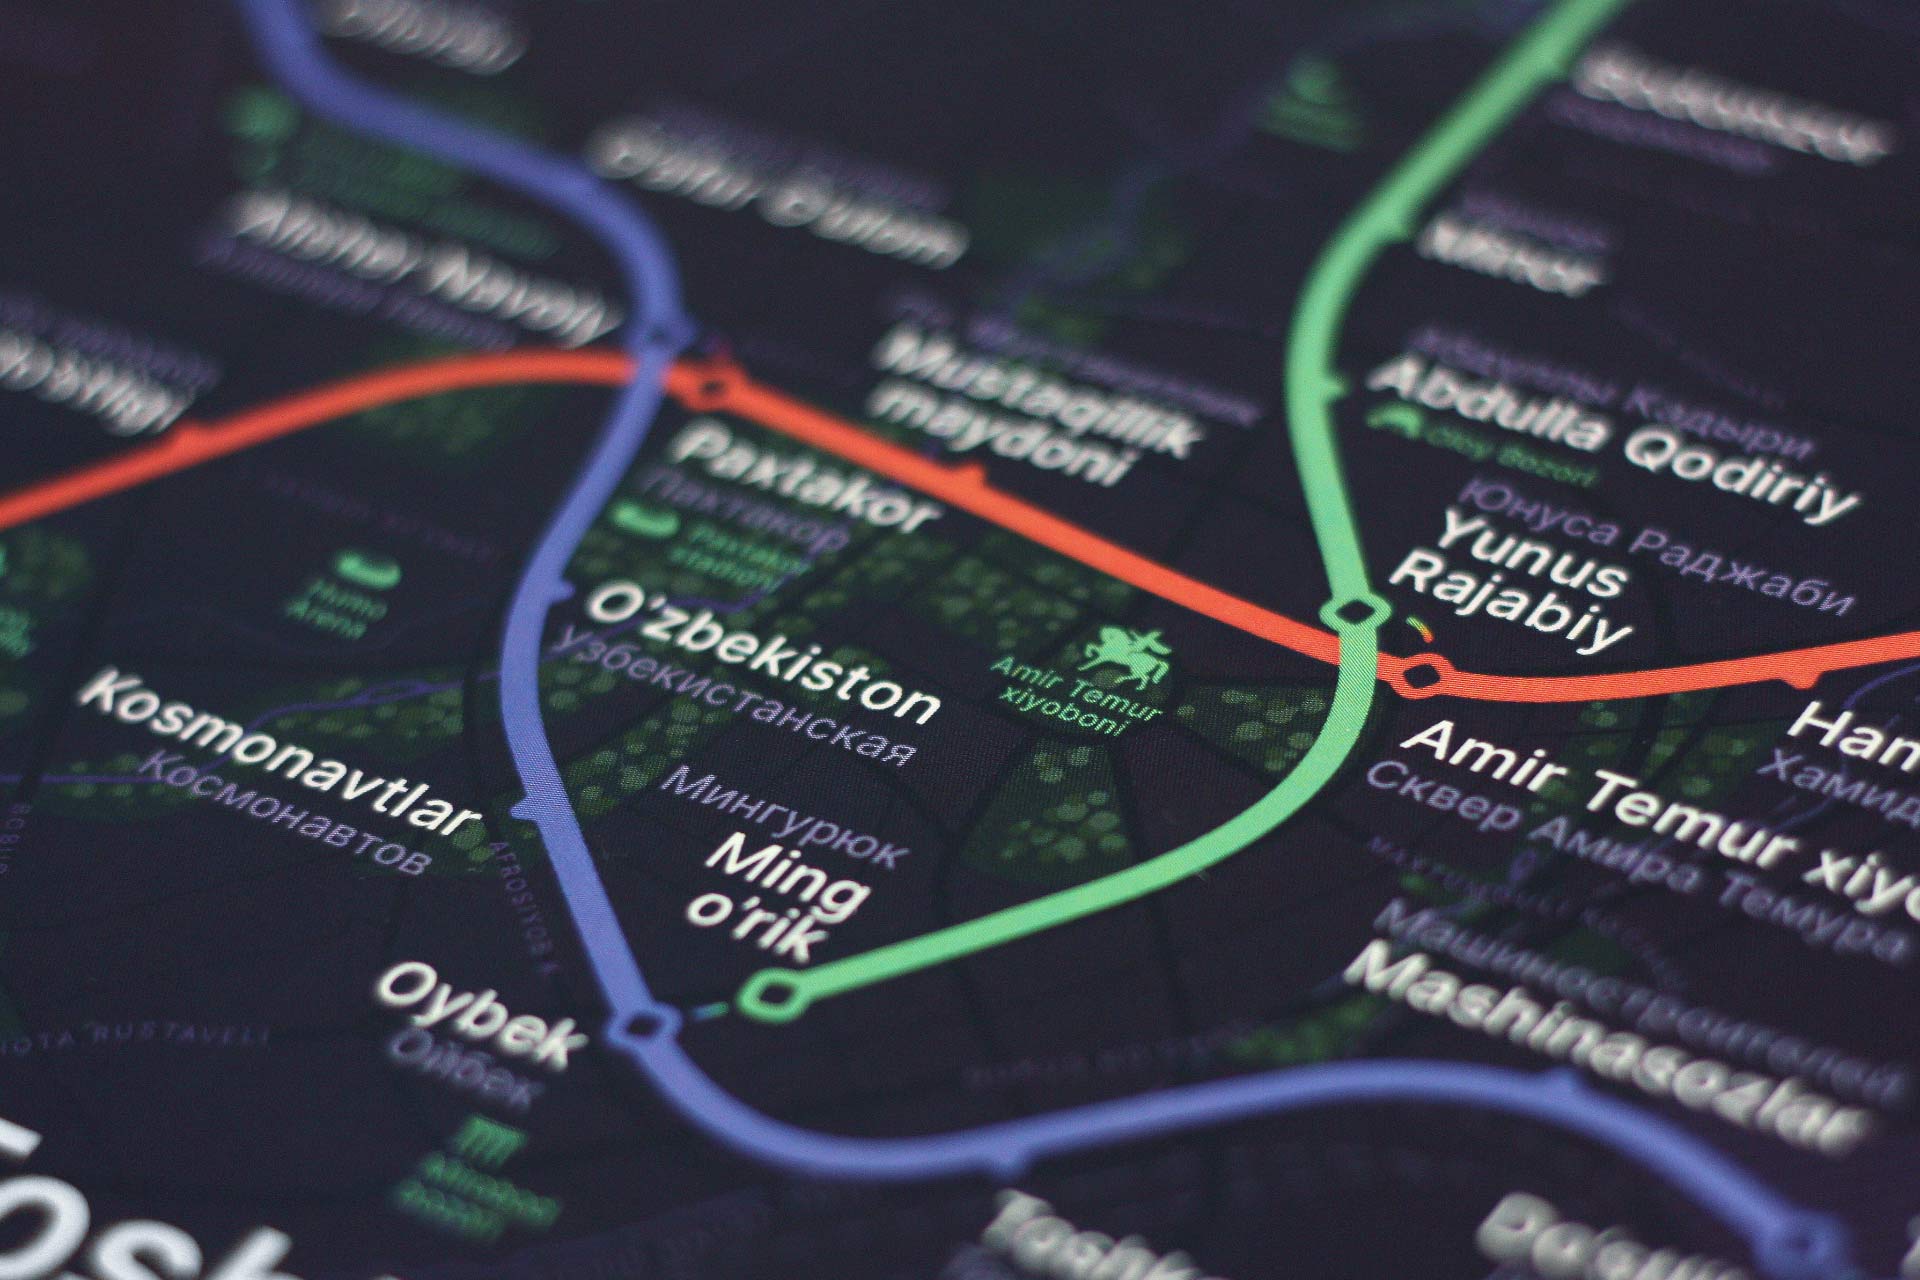 Tashkent Metro map